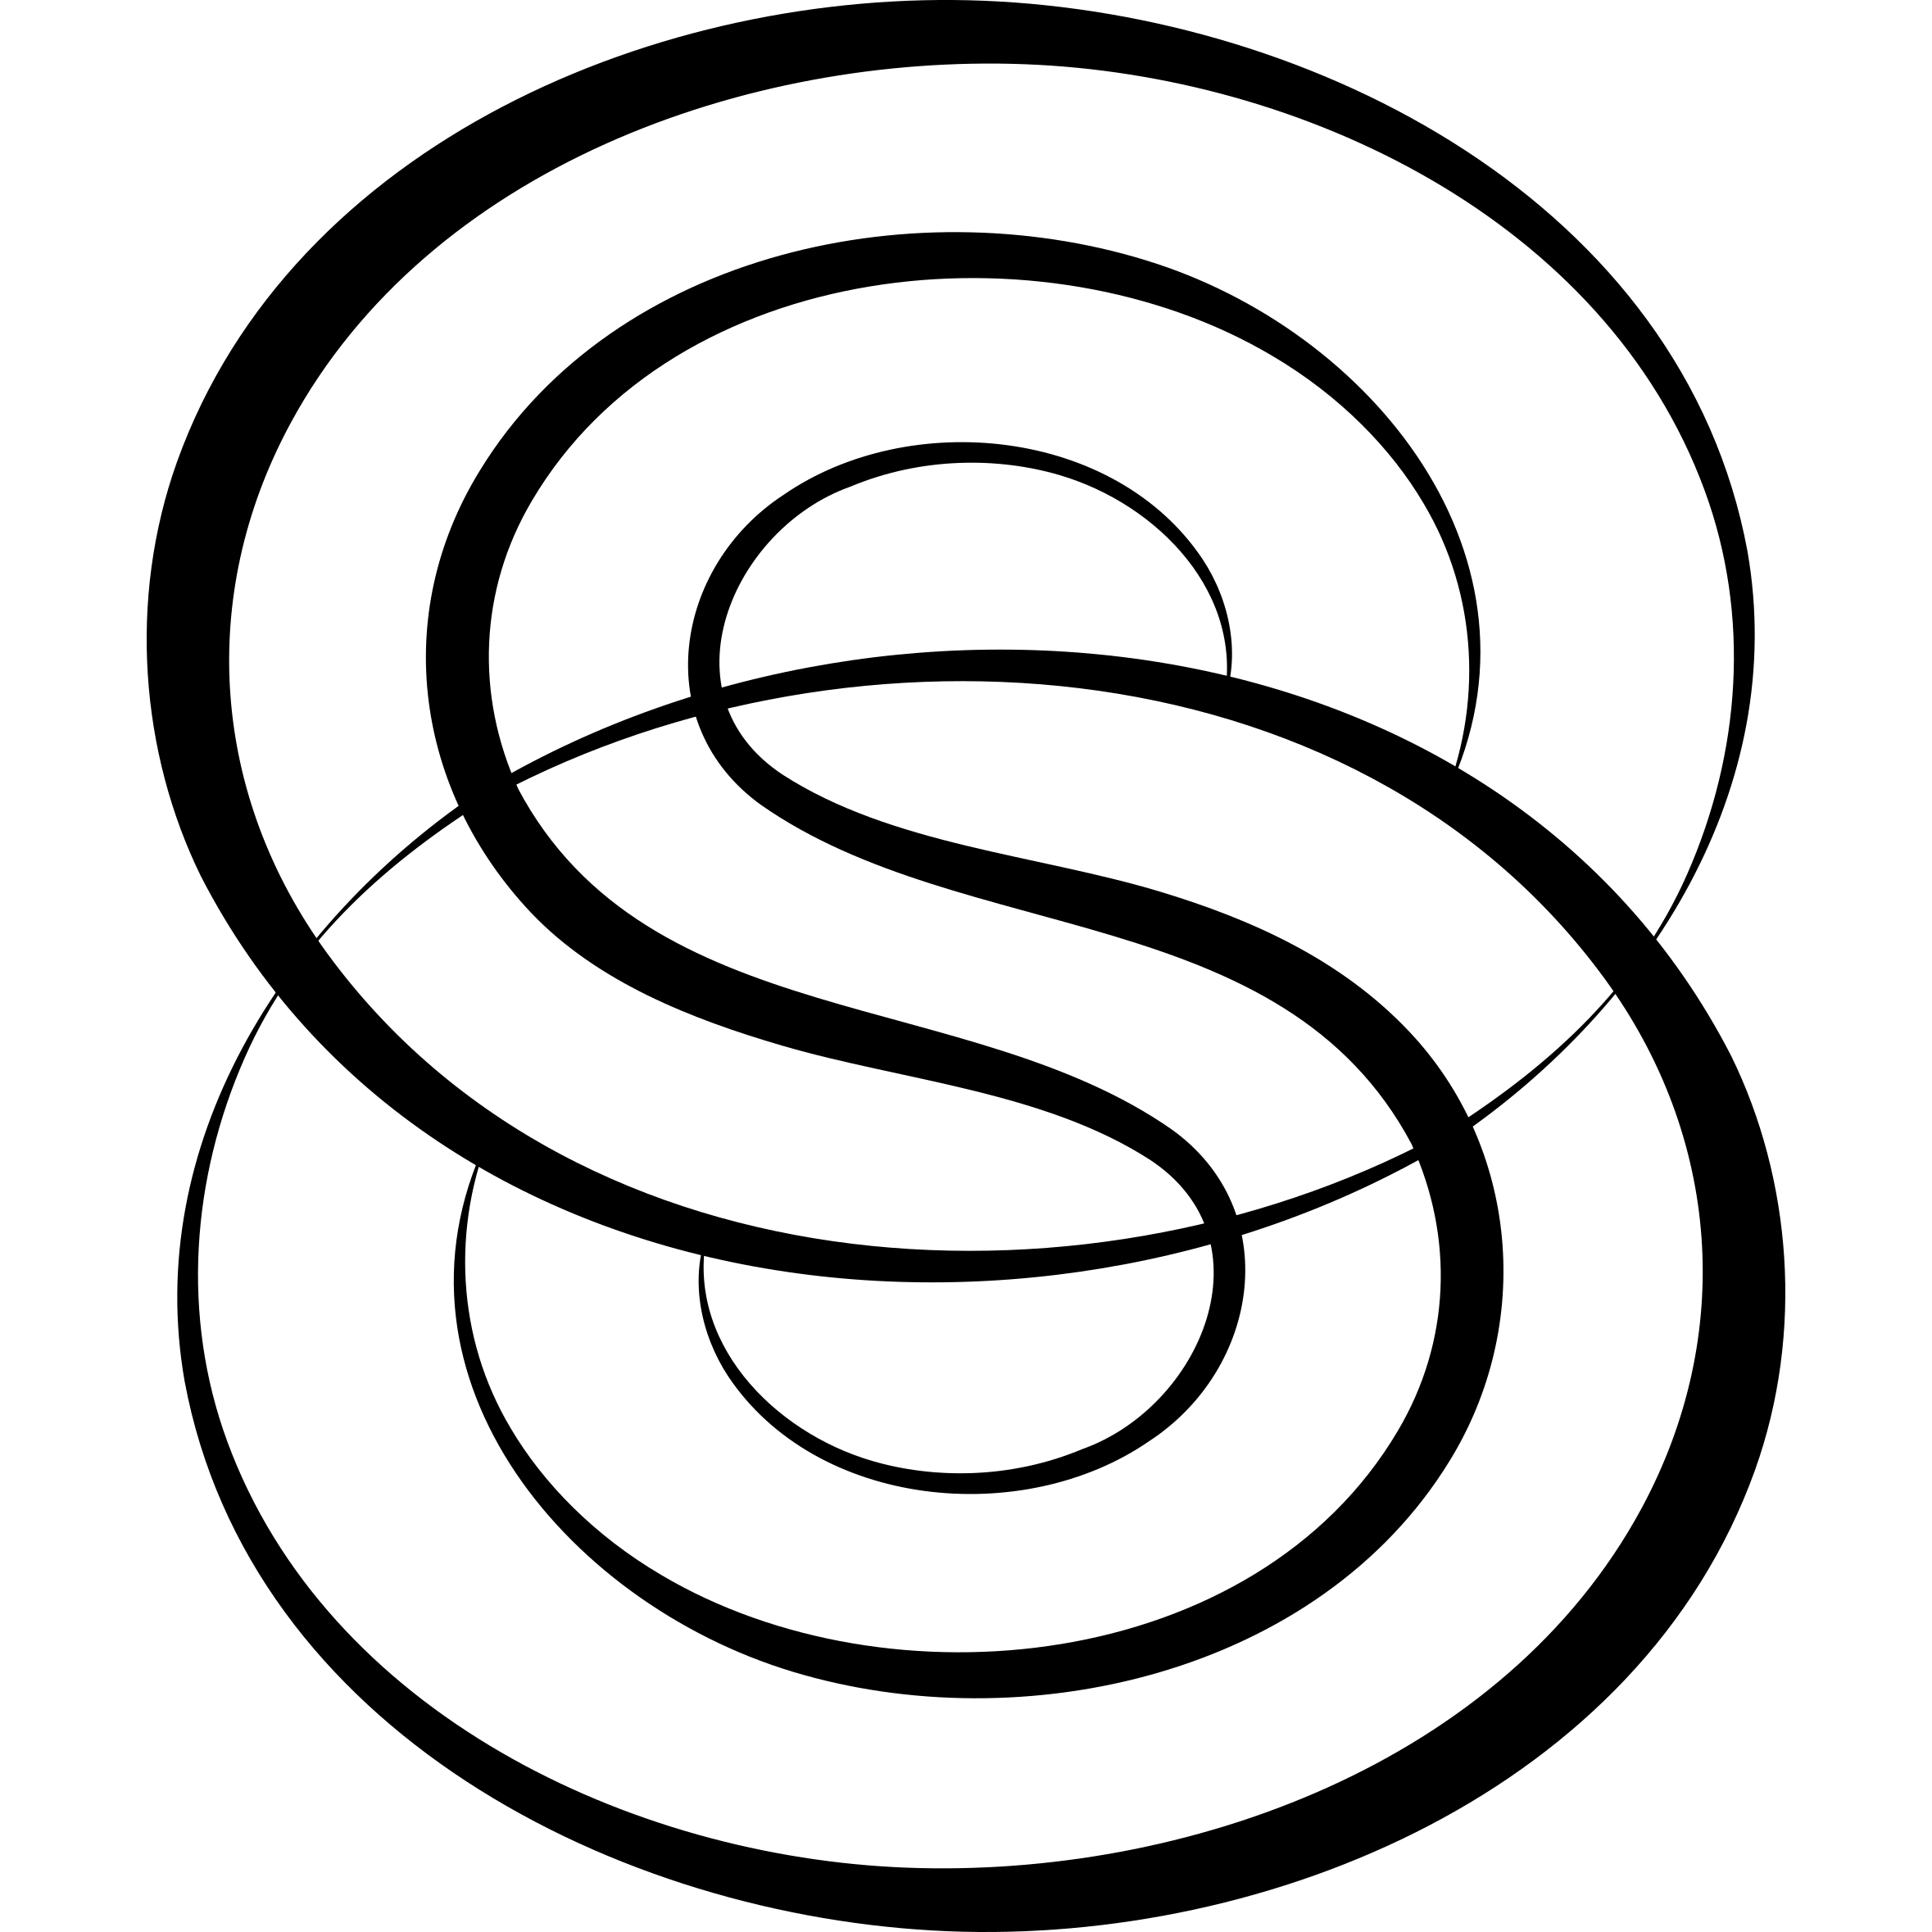 SENSO logo in png format